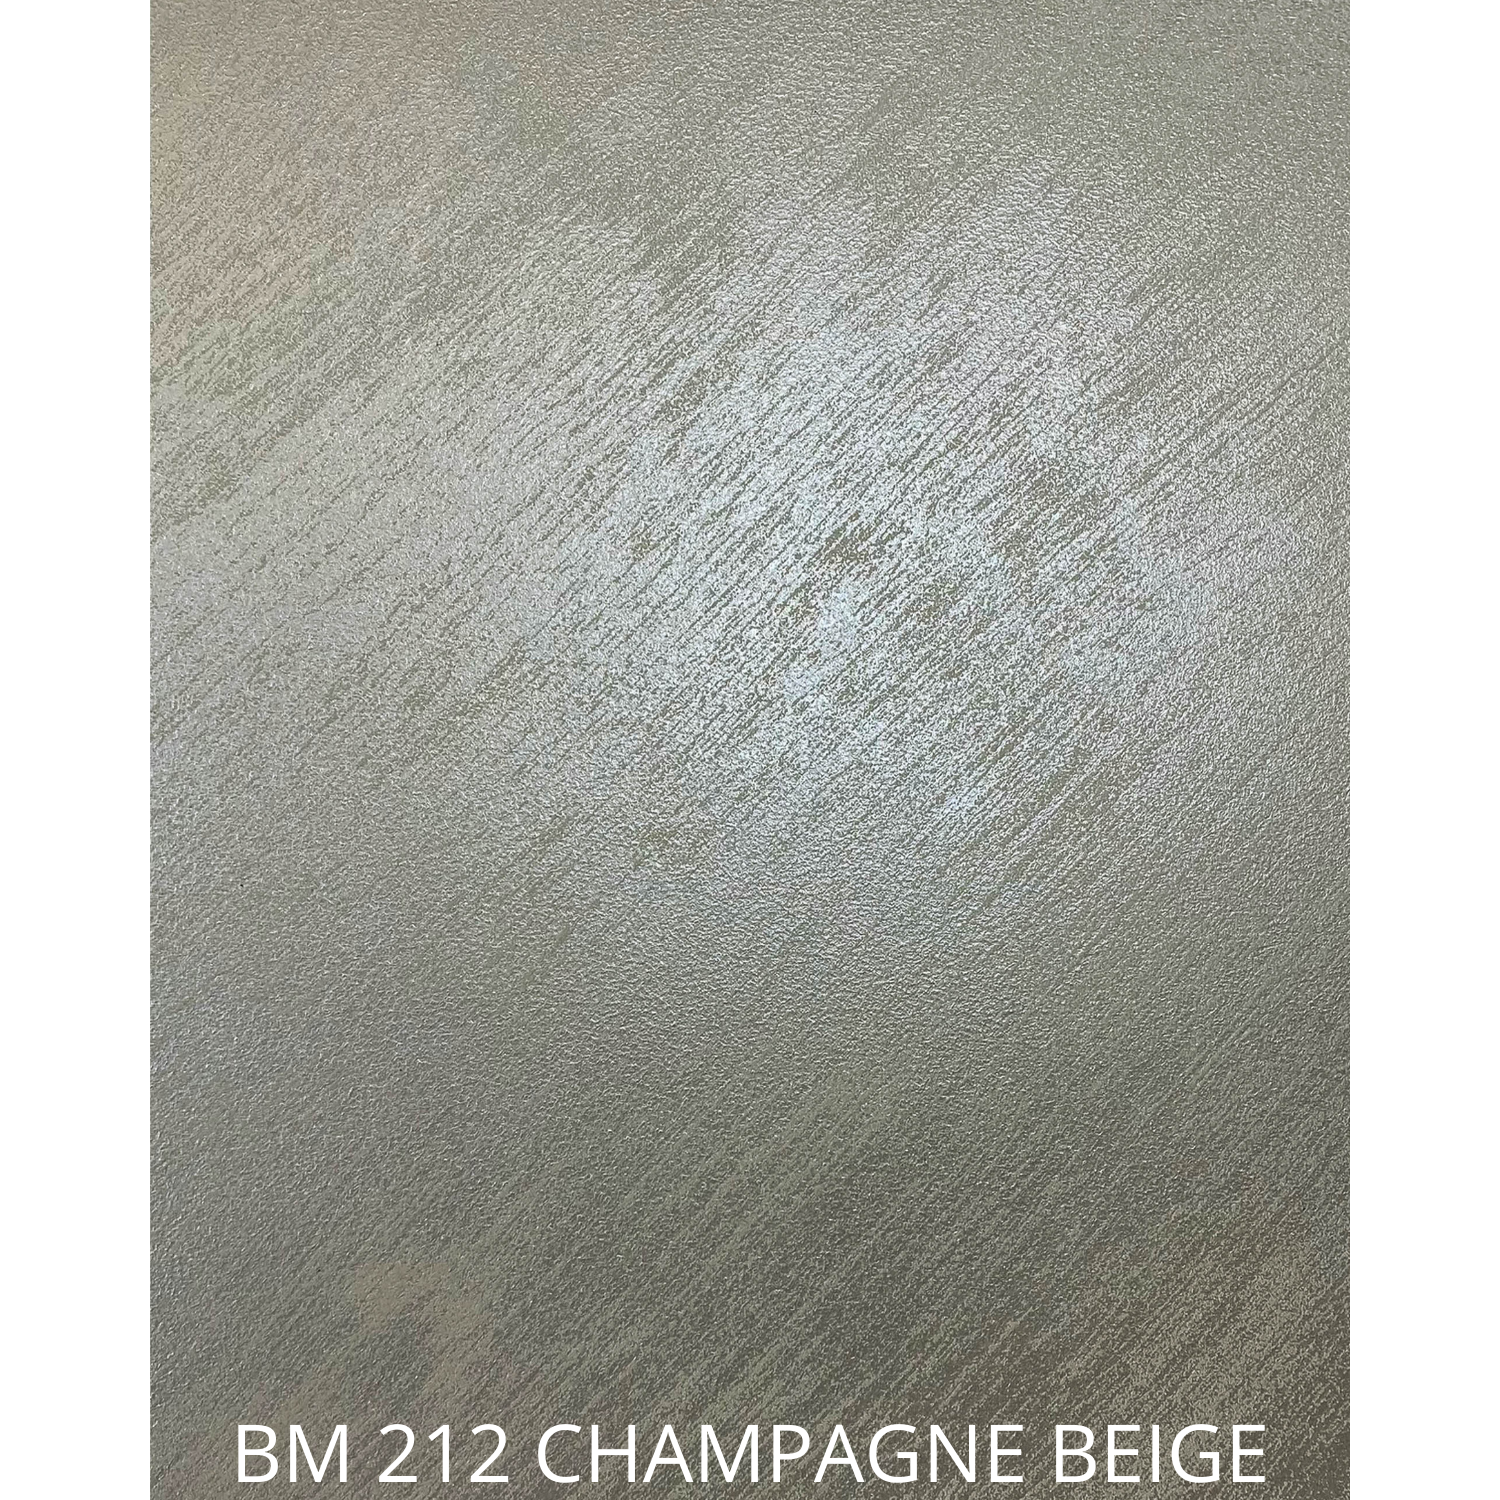 BM 212 CHAMPAGNE BEIGE